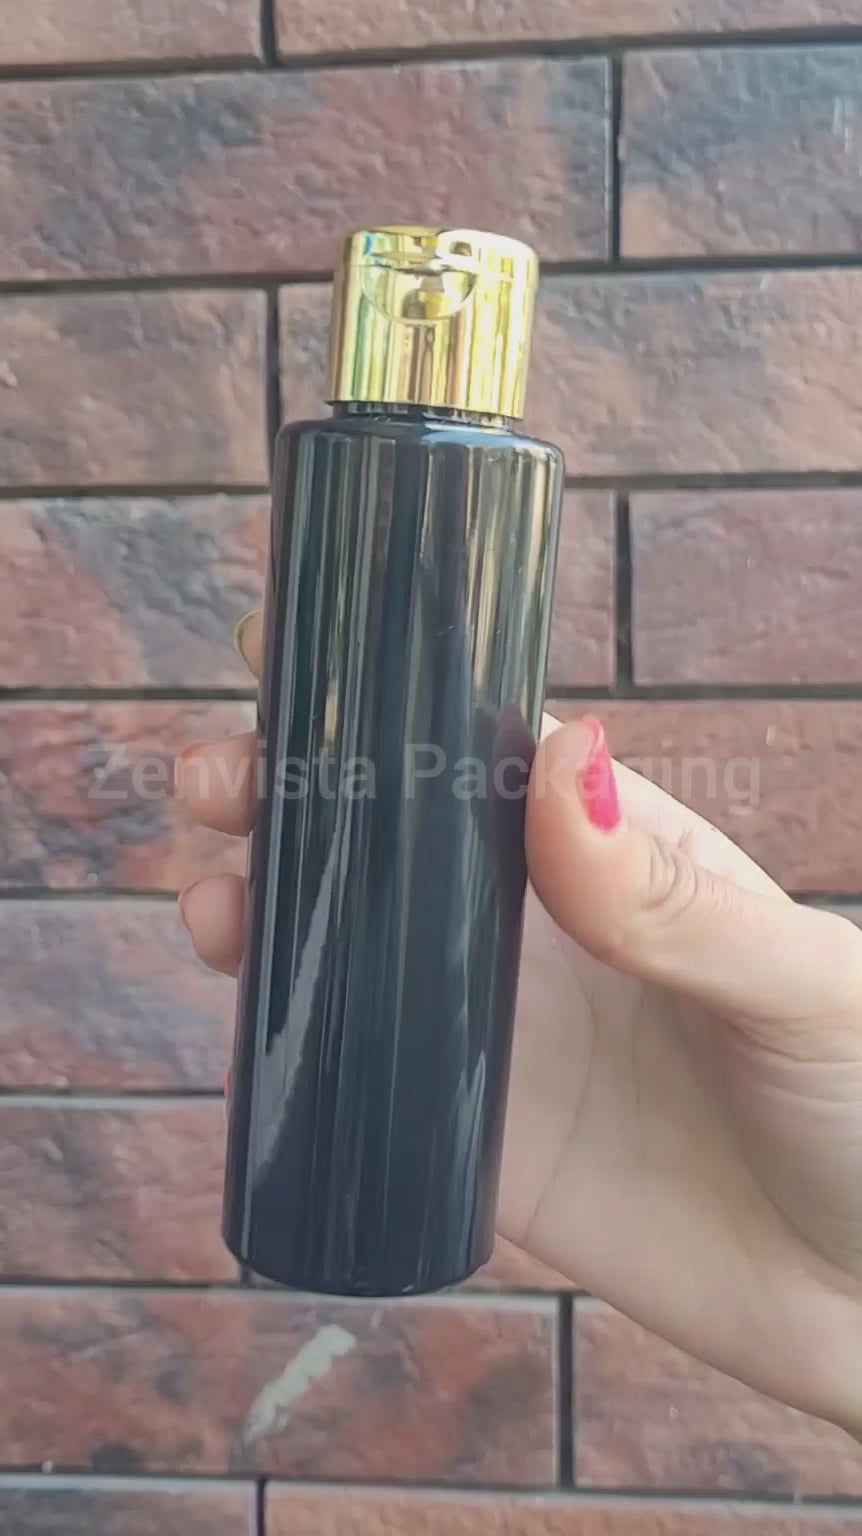 Black Color Premium Empty Pet Bottles With Gold Plated Flip-Top Cap 200ML [ZMK35]